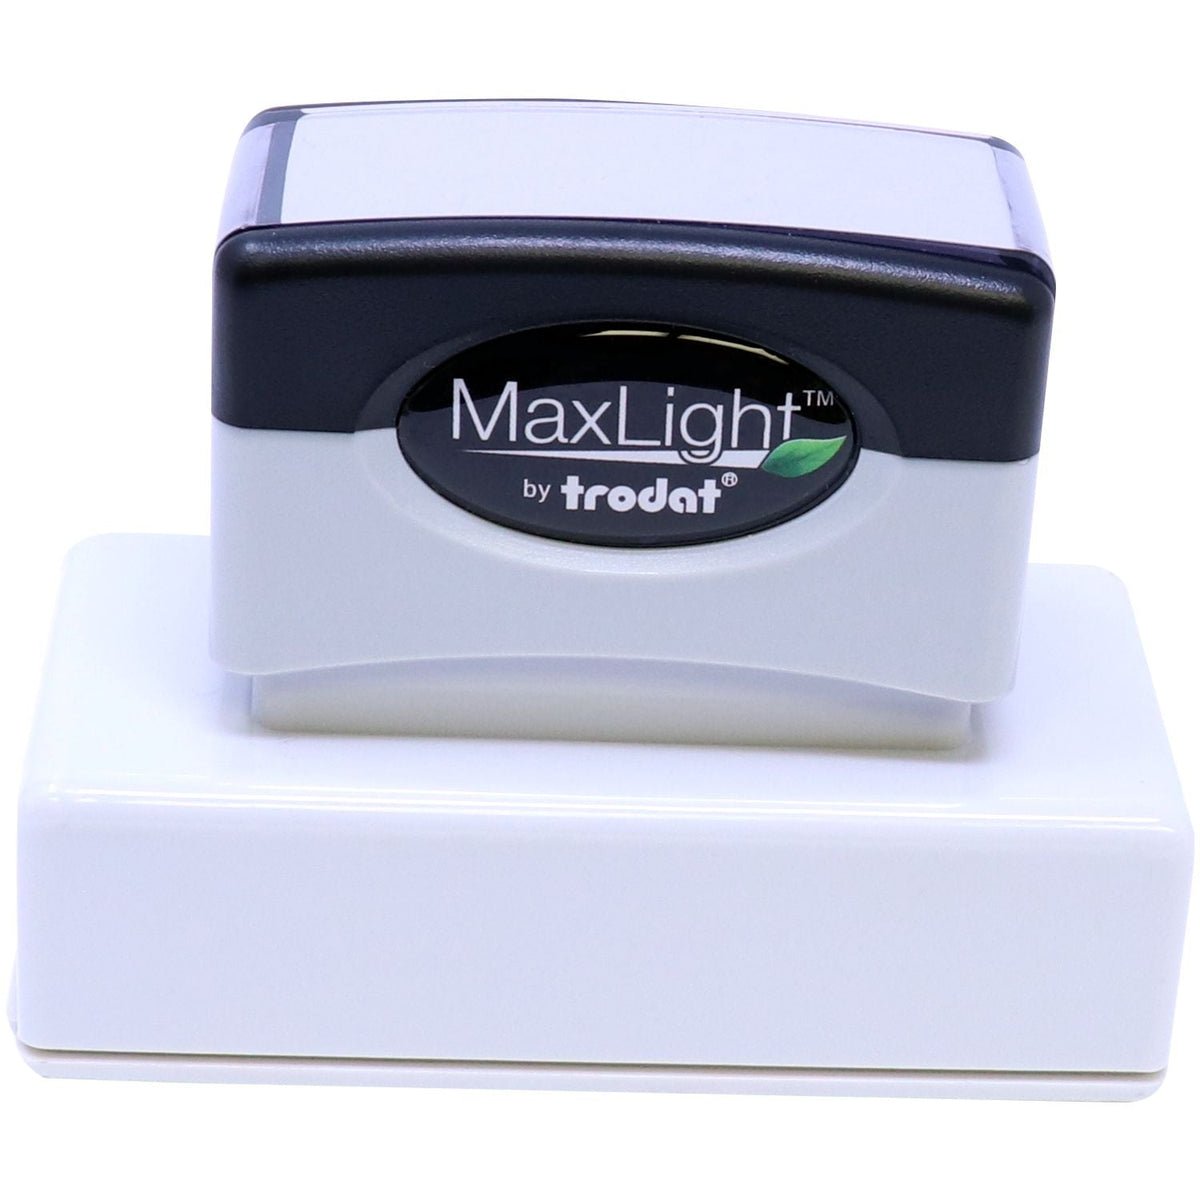 Maxlight Custom Stamp Xl2 185 Top Front 